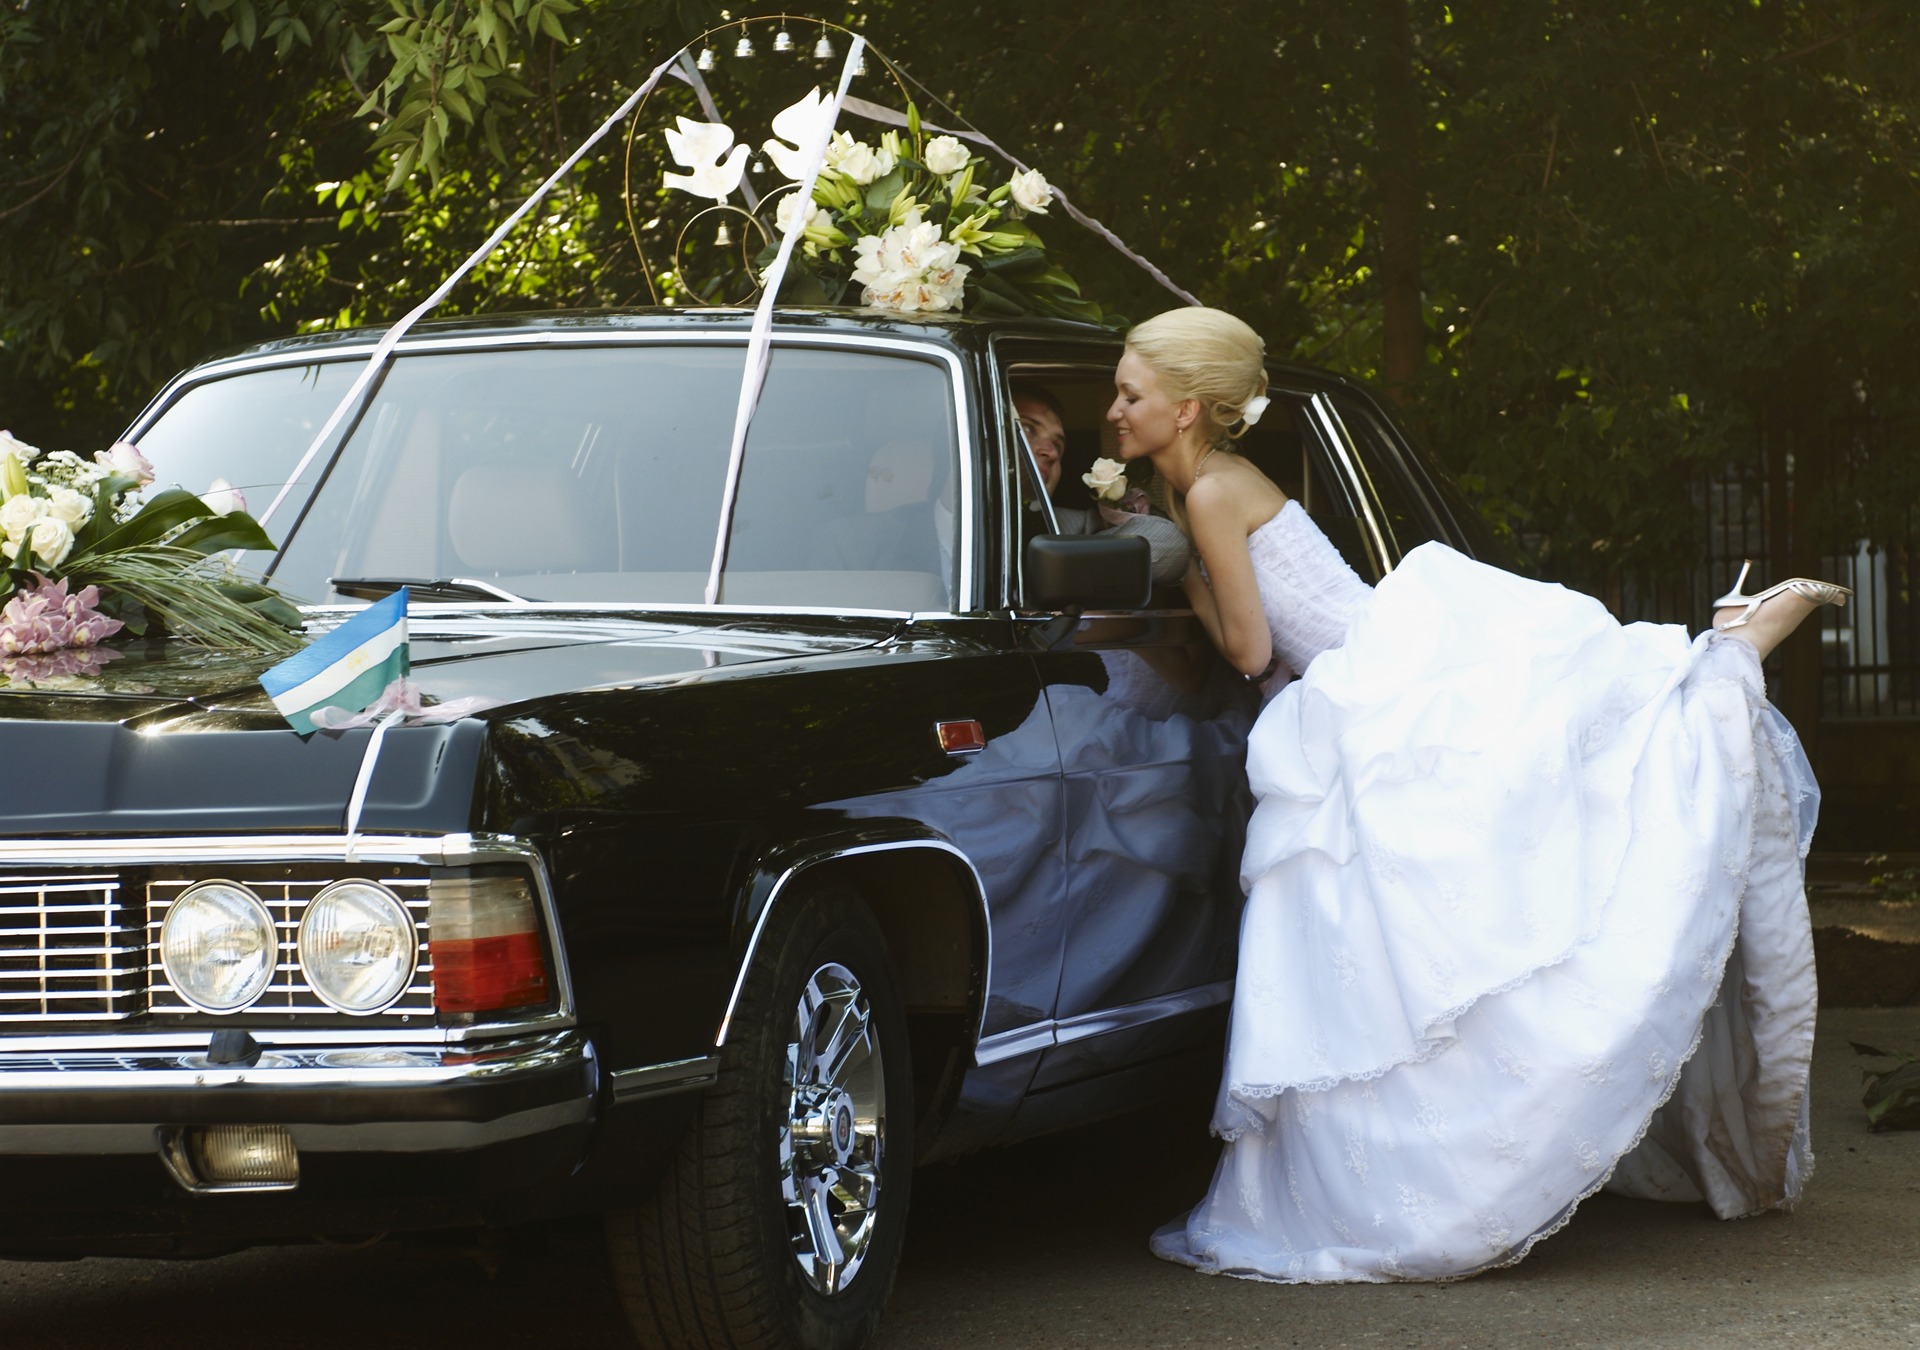 Прическа на свадьбу машину